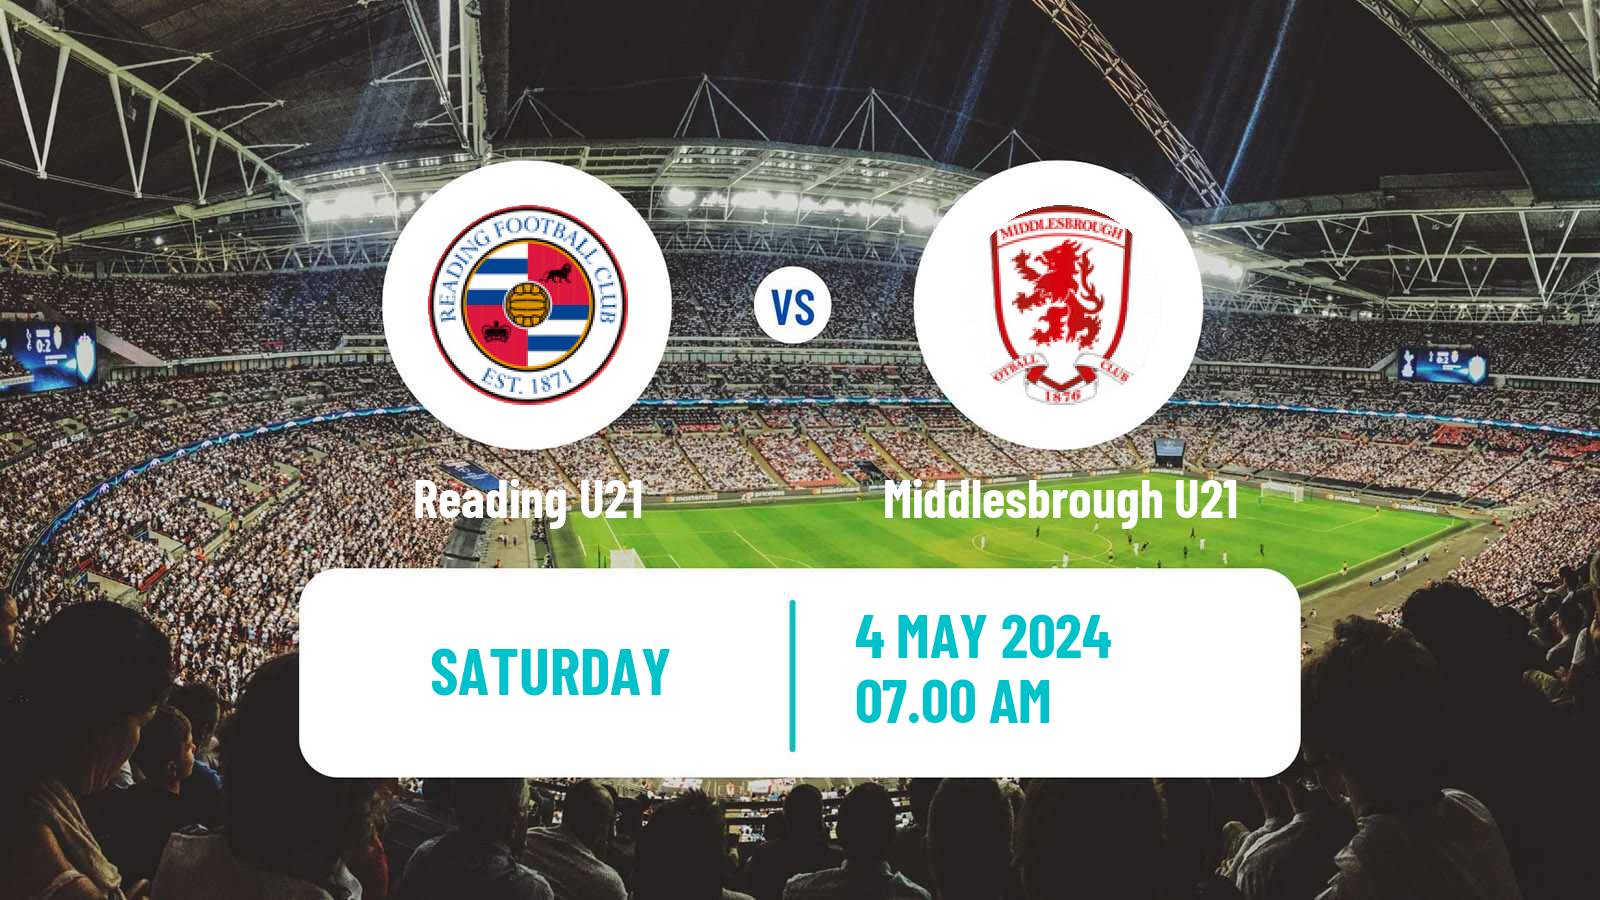 Soccer English Premier League 2 Reading U21 - Middlesbrough U21